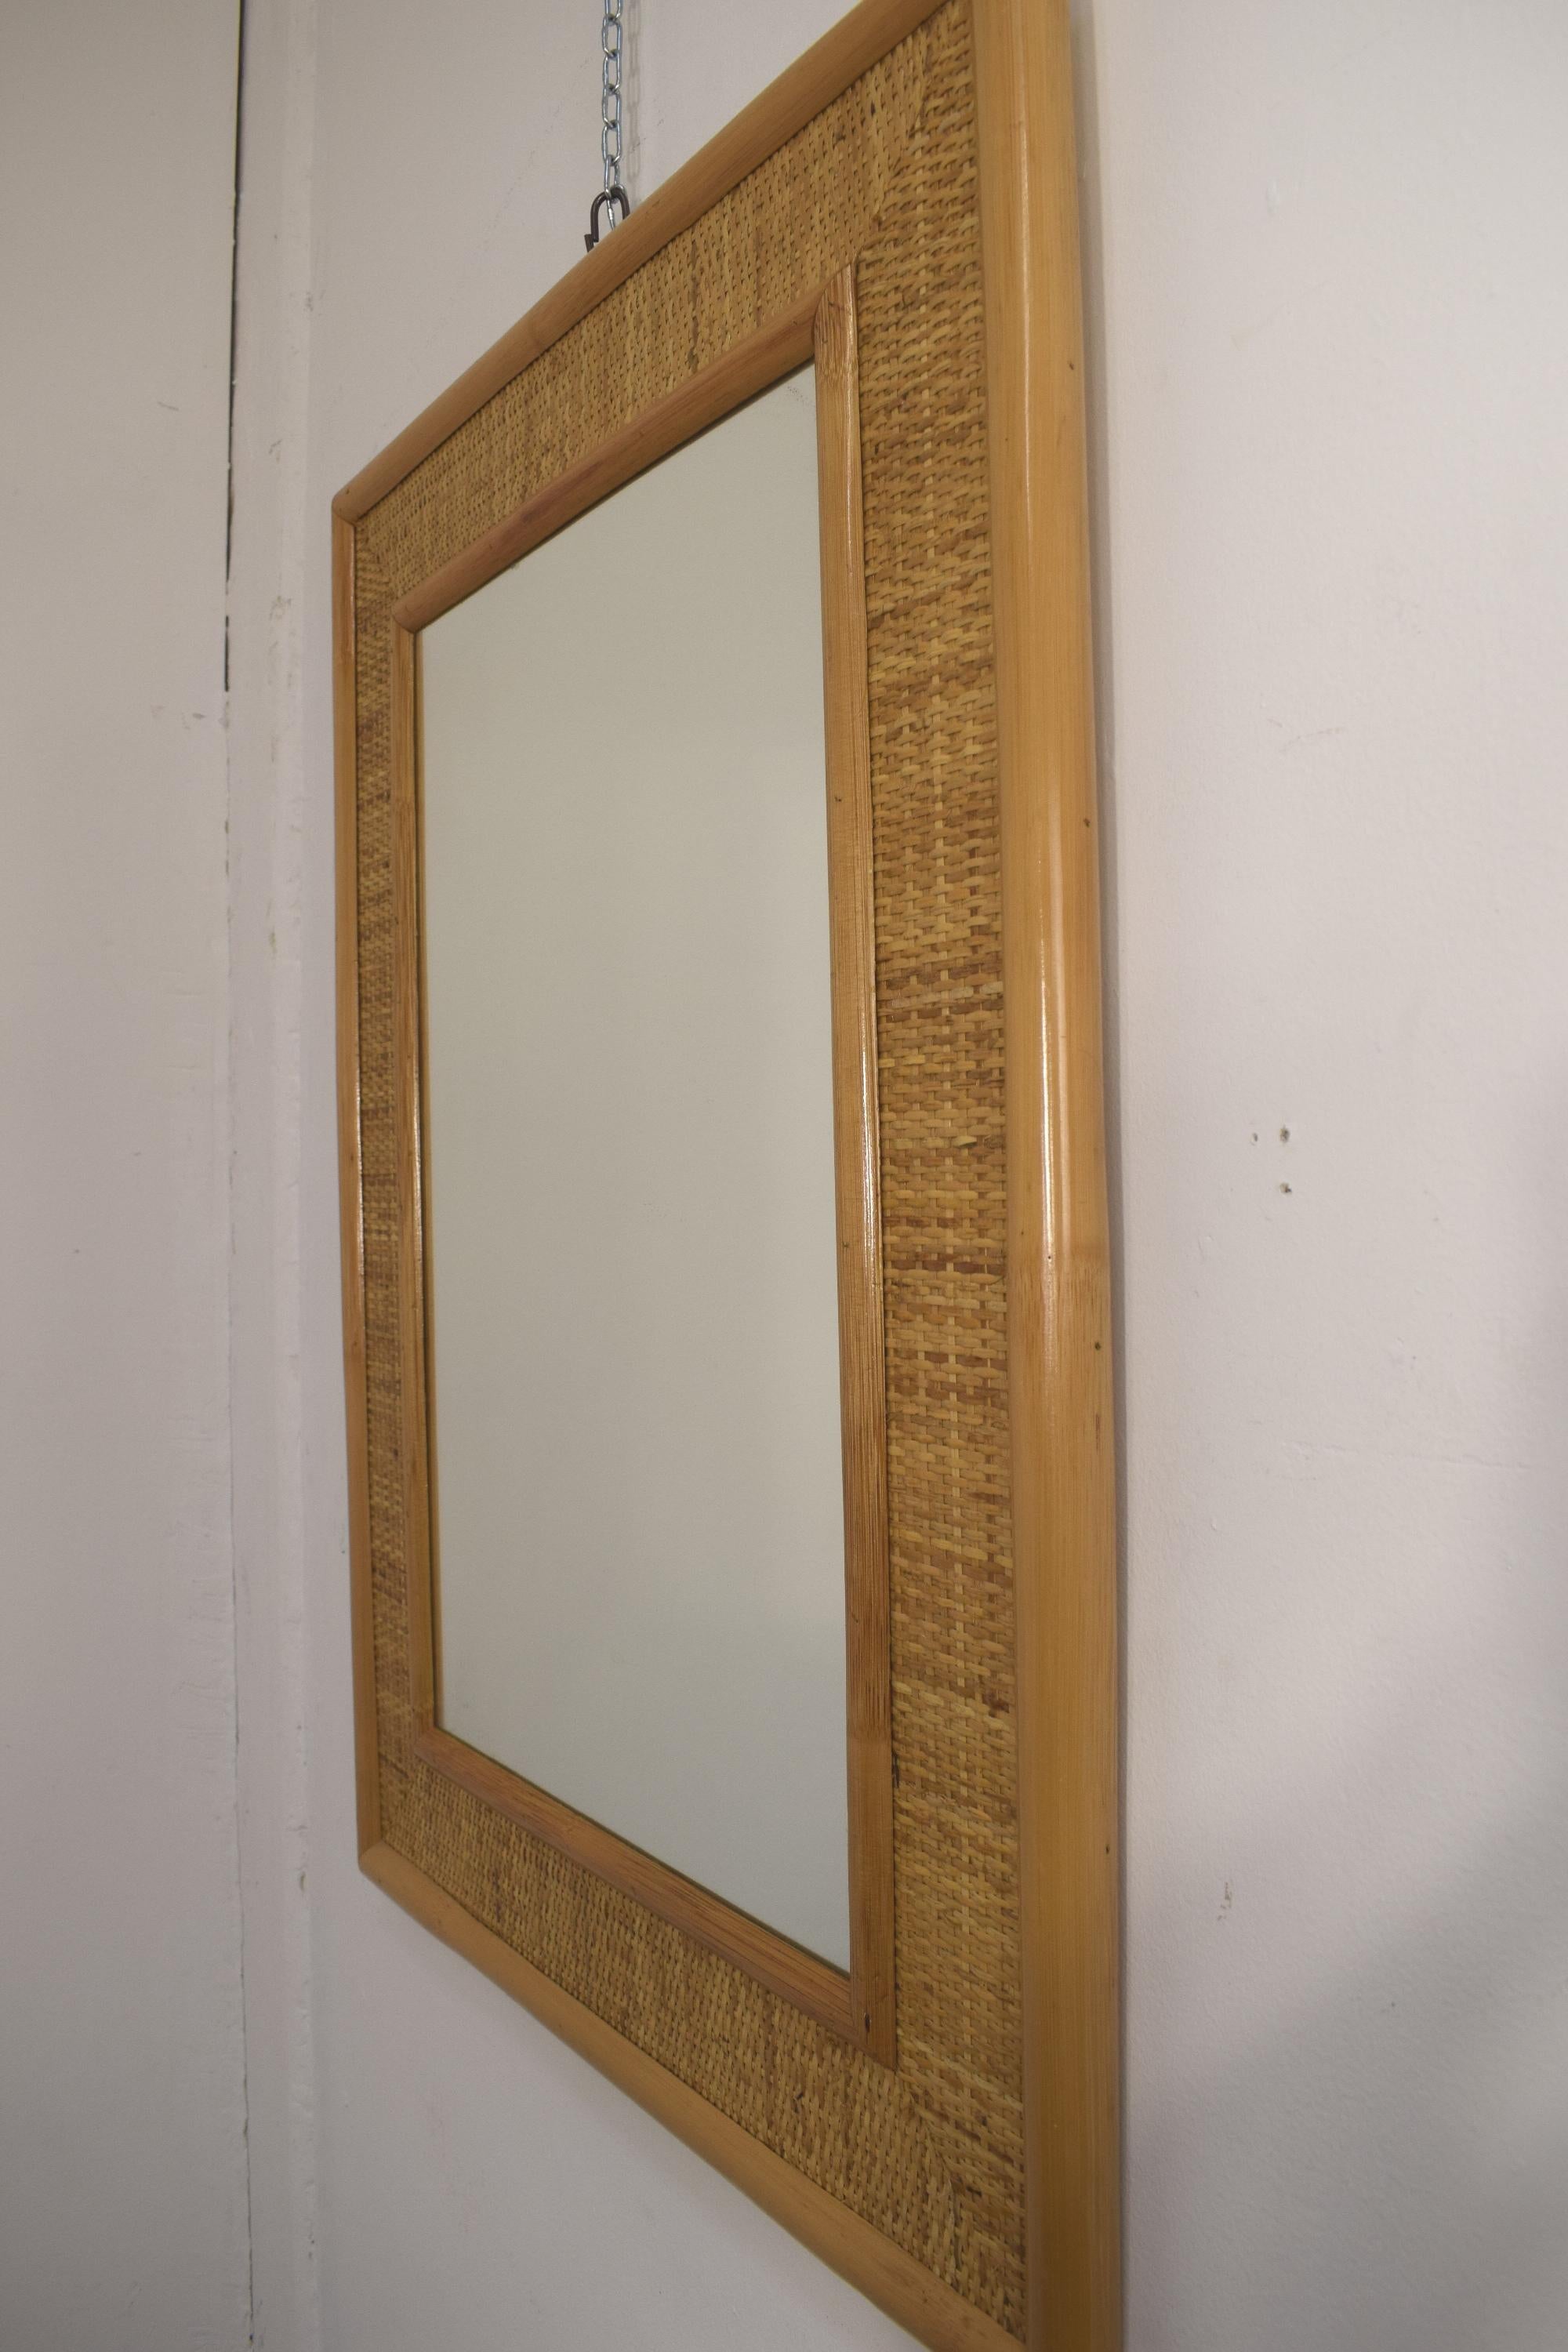 Italian bamboo wall mirror, 1970s.

Dimensions: H= 82 cm; W= 62 cm; D= 3 cm.